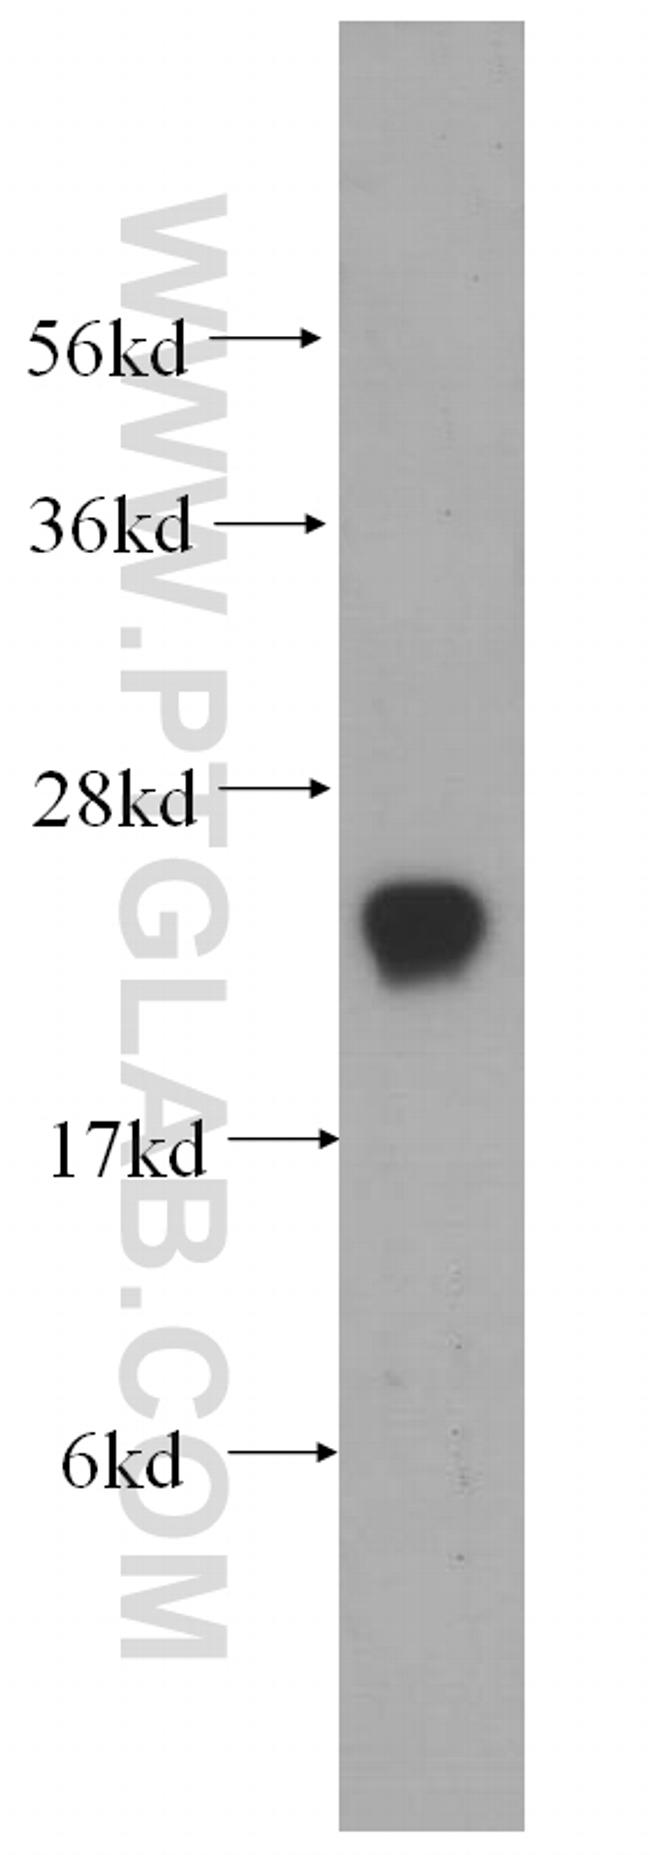 SPCS2 Antibody in Western Blot (WB)